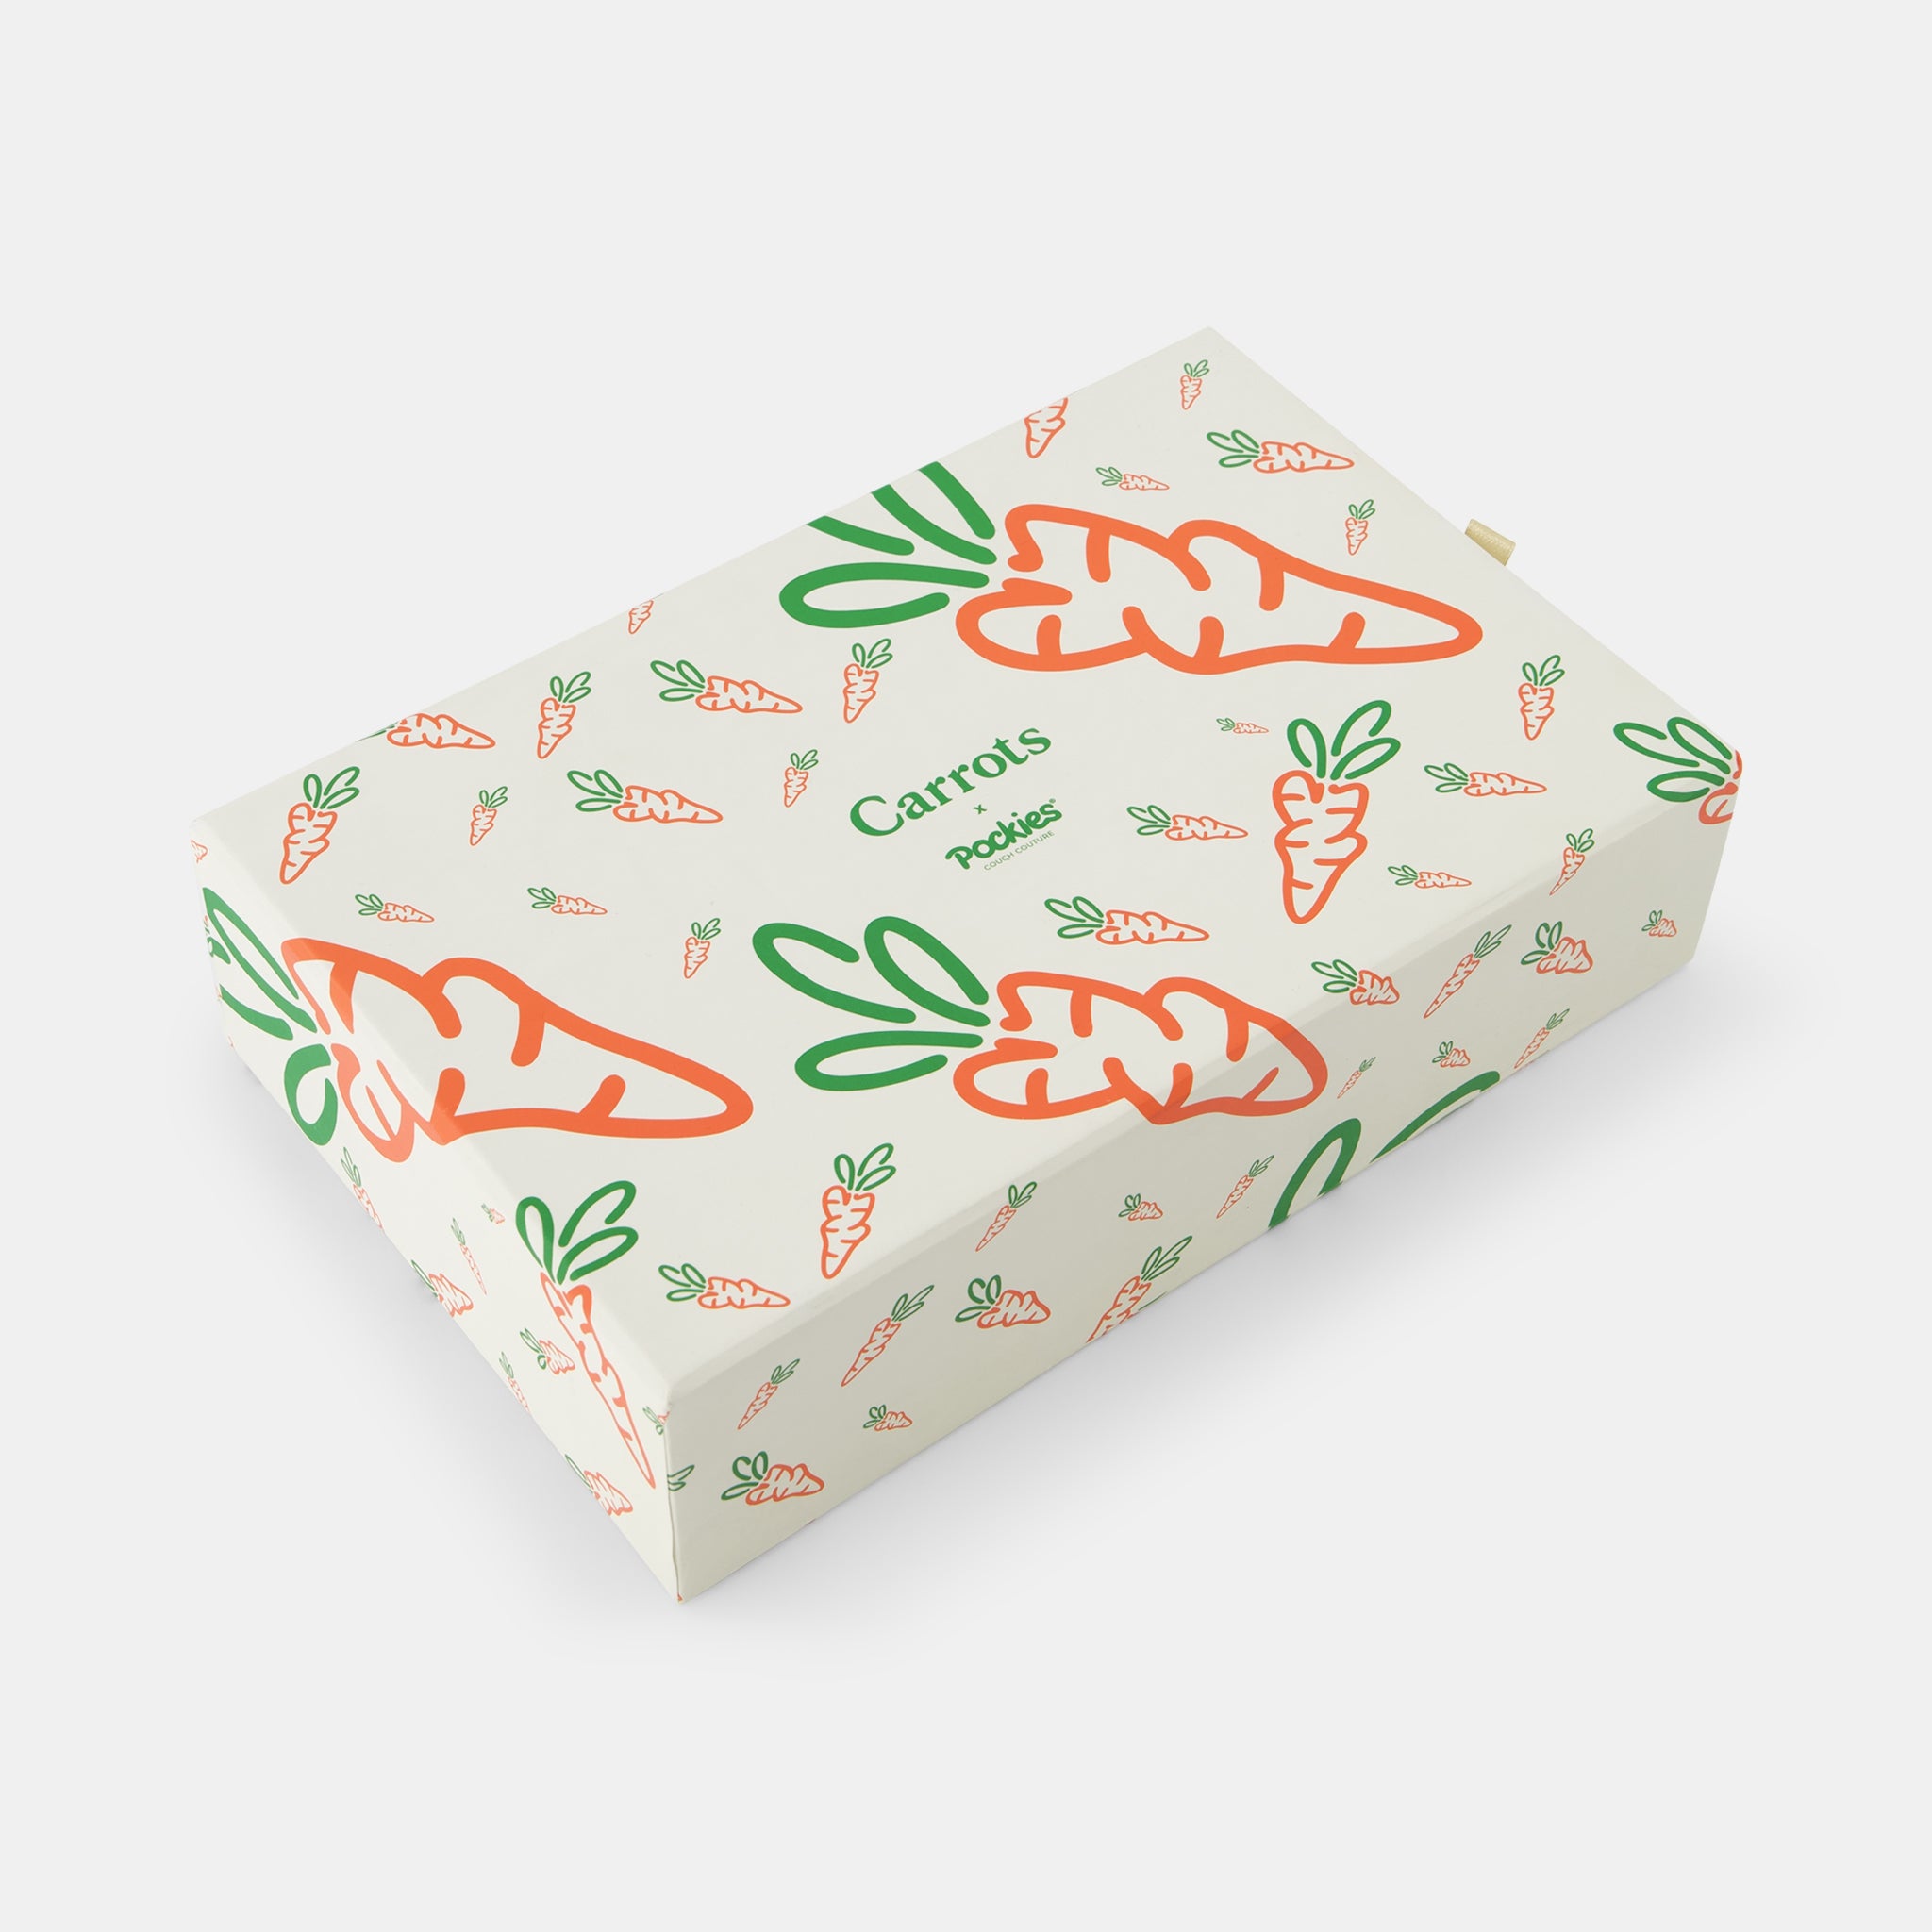 Carrots by Pockies Giftbox (2pcs)